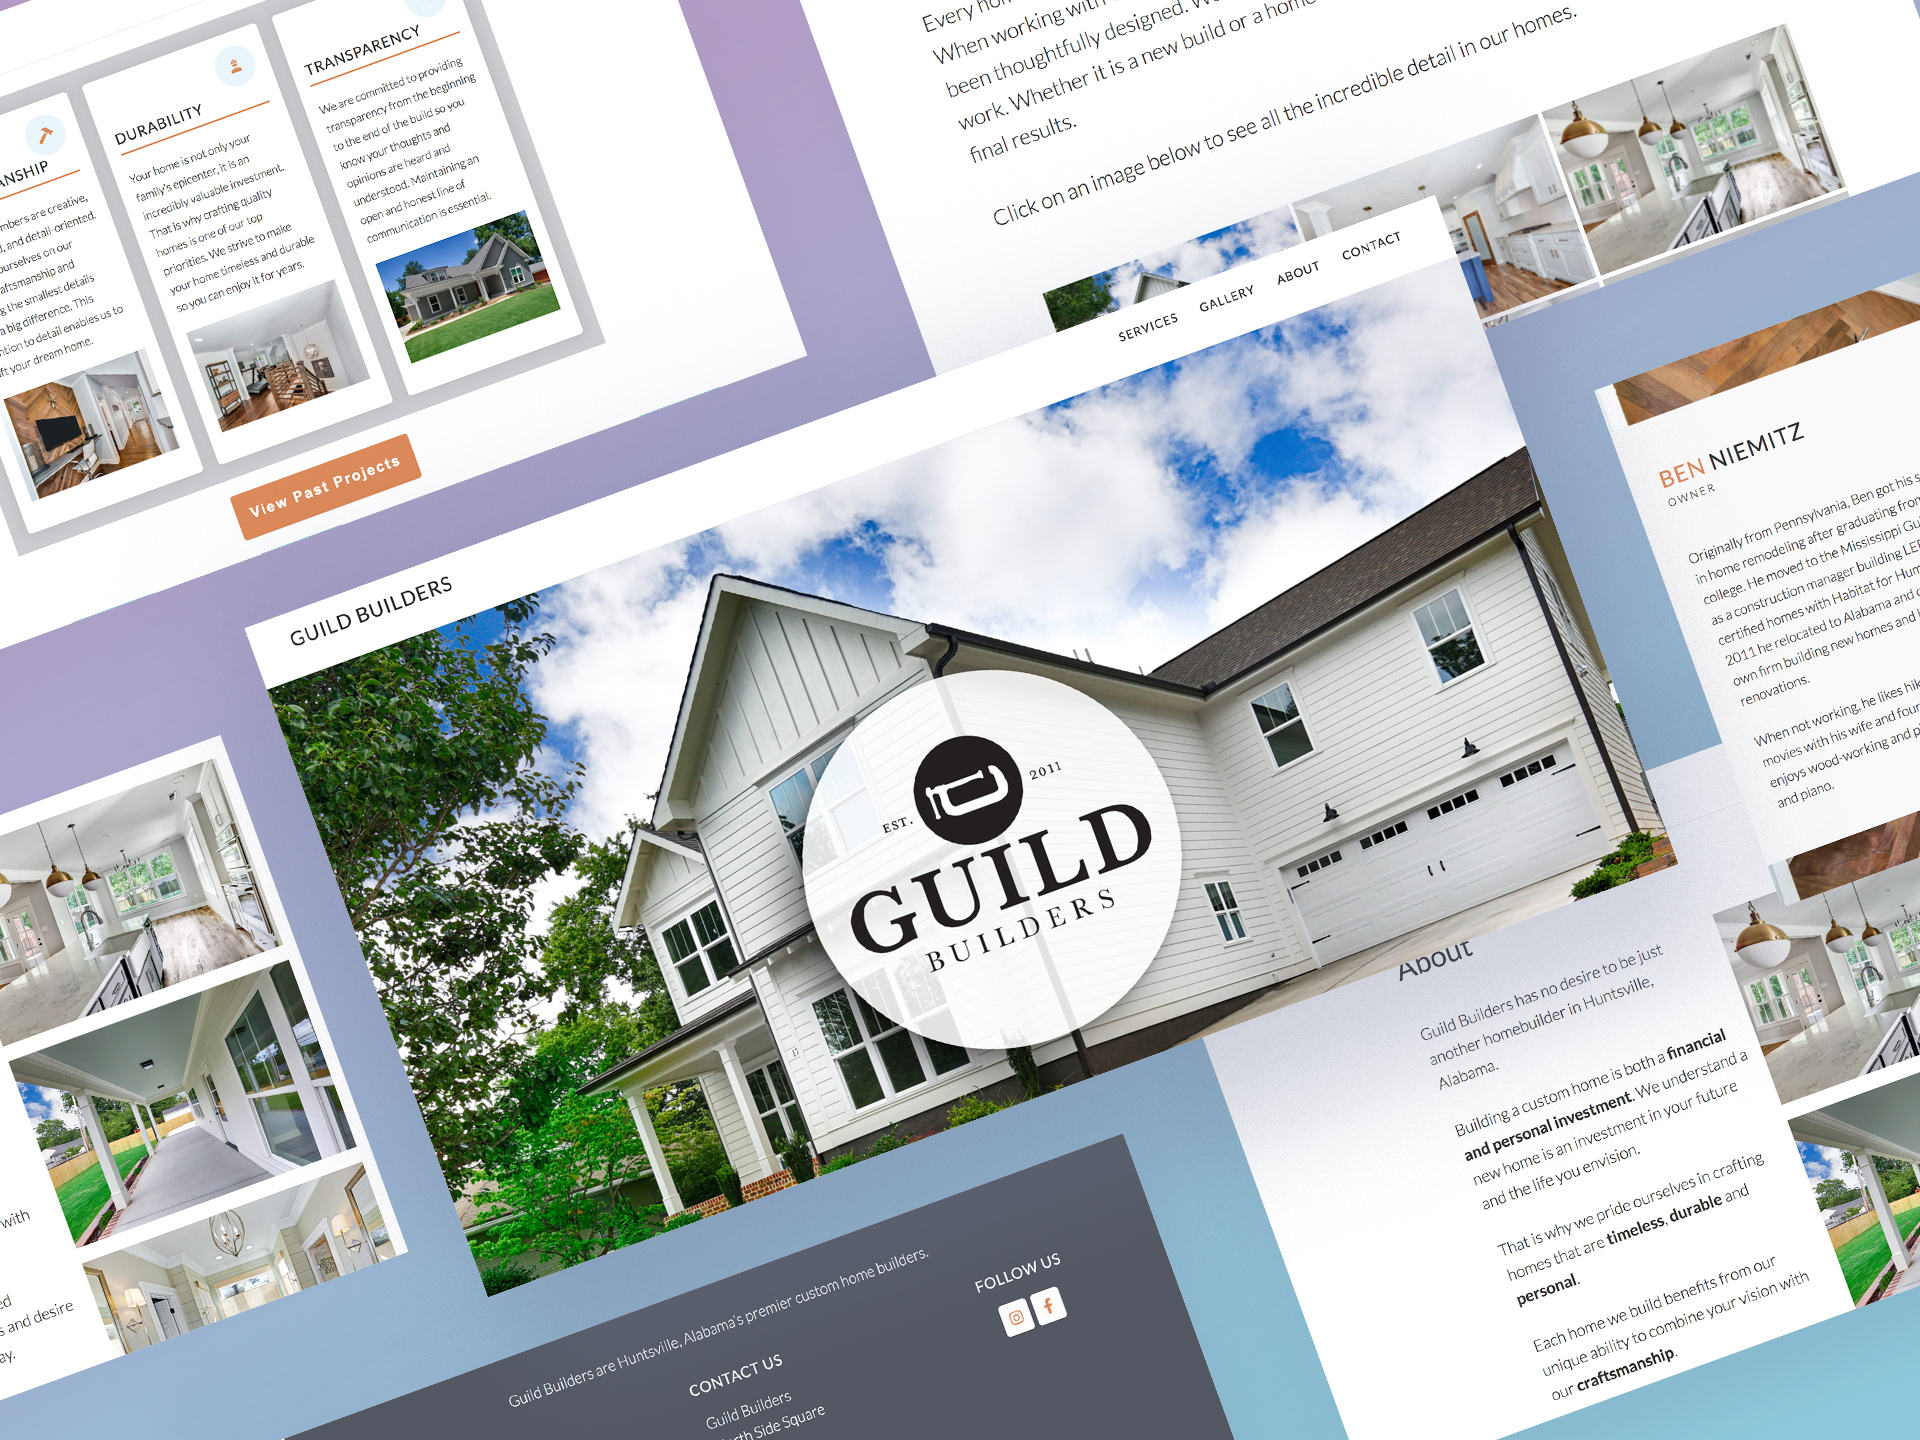 Guild Builders website images